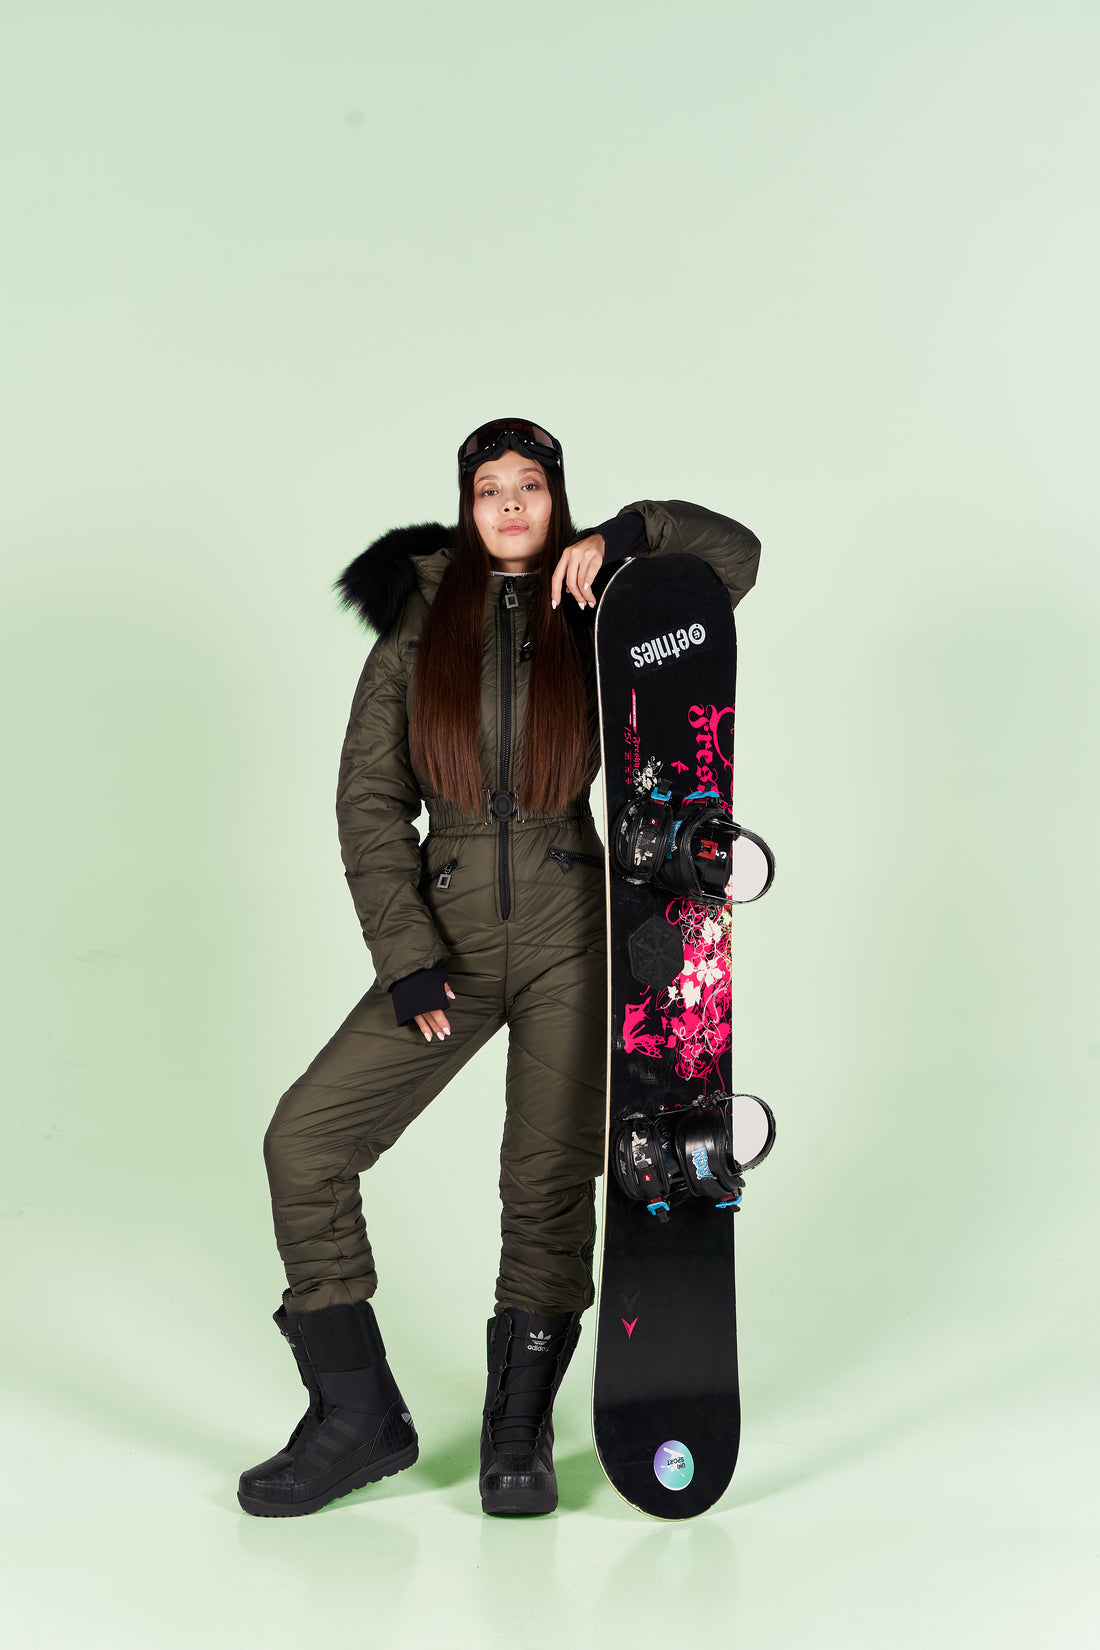 Olive one piece snow suit ELIAS - KHAKI winter ski clothes for women